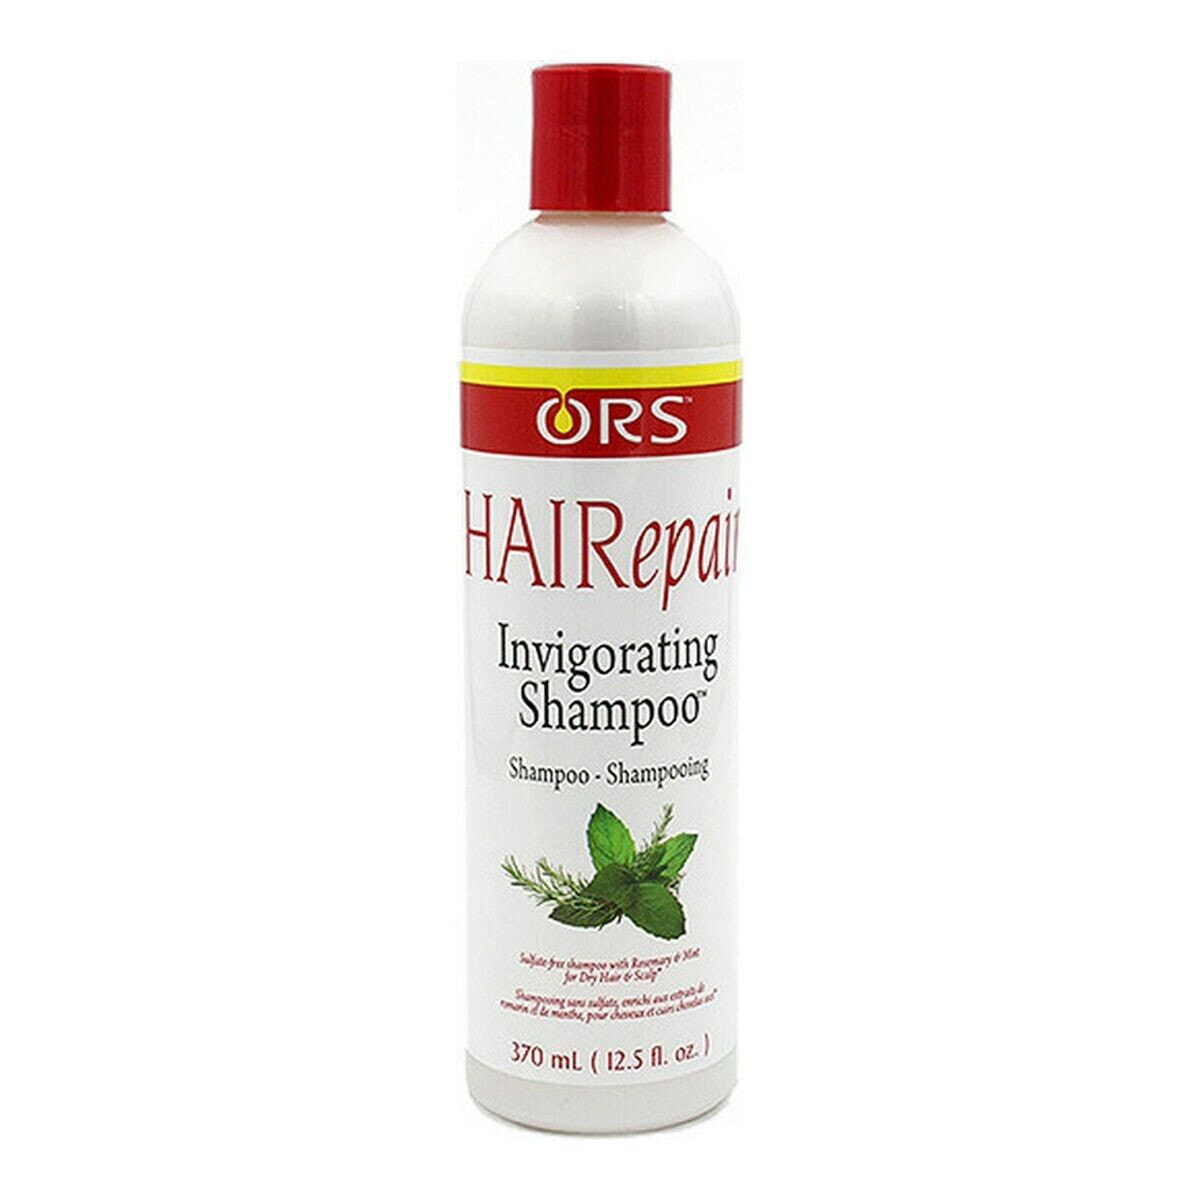 Шампунь Hairepair Invigorating Ors 11003 (370 ml)